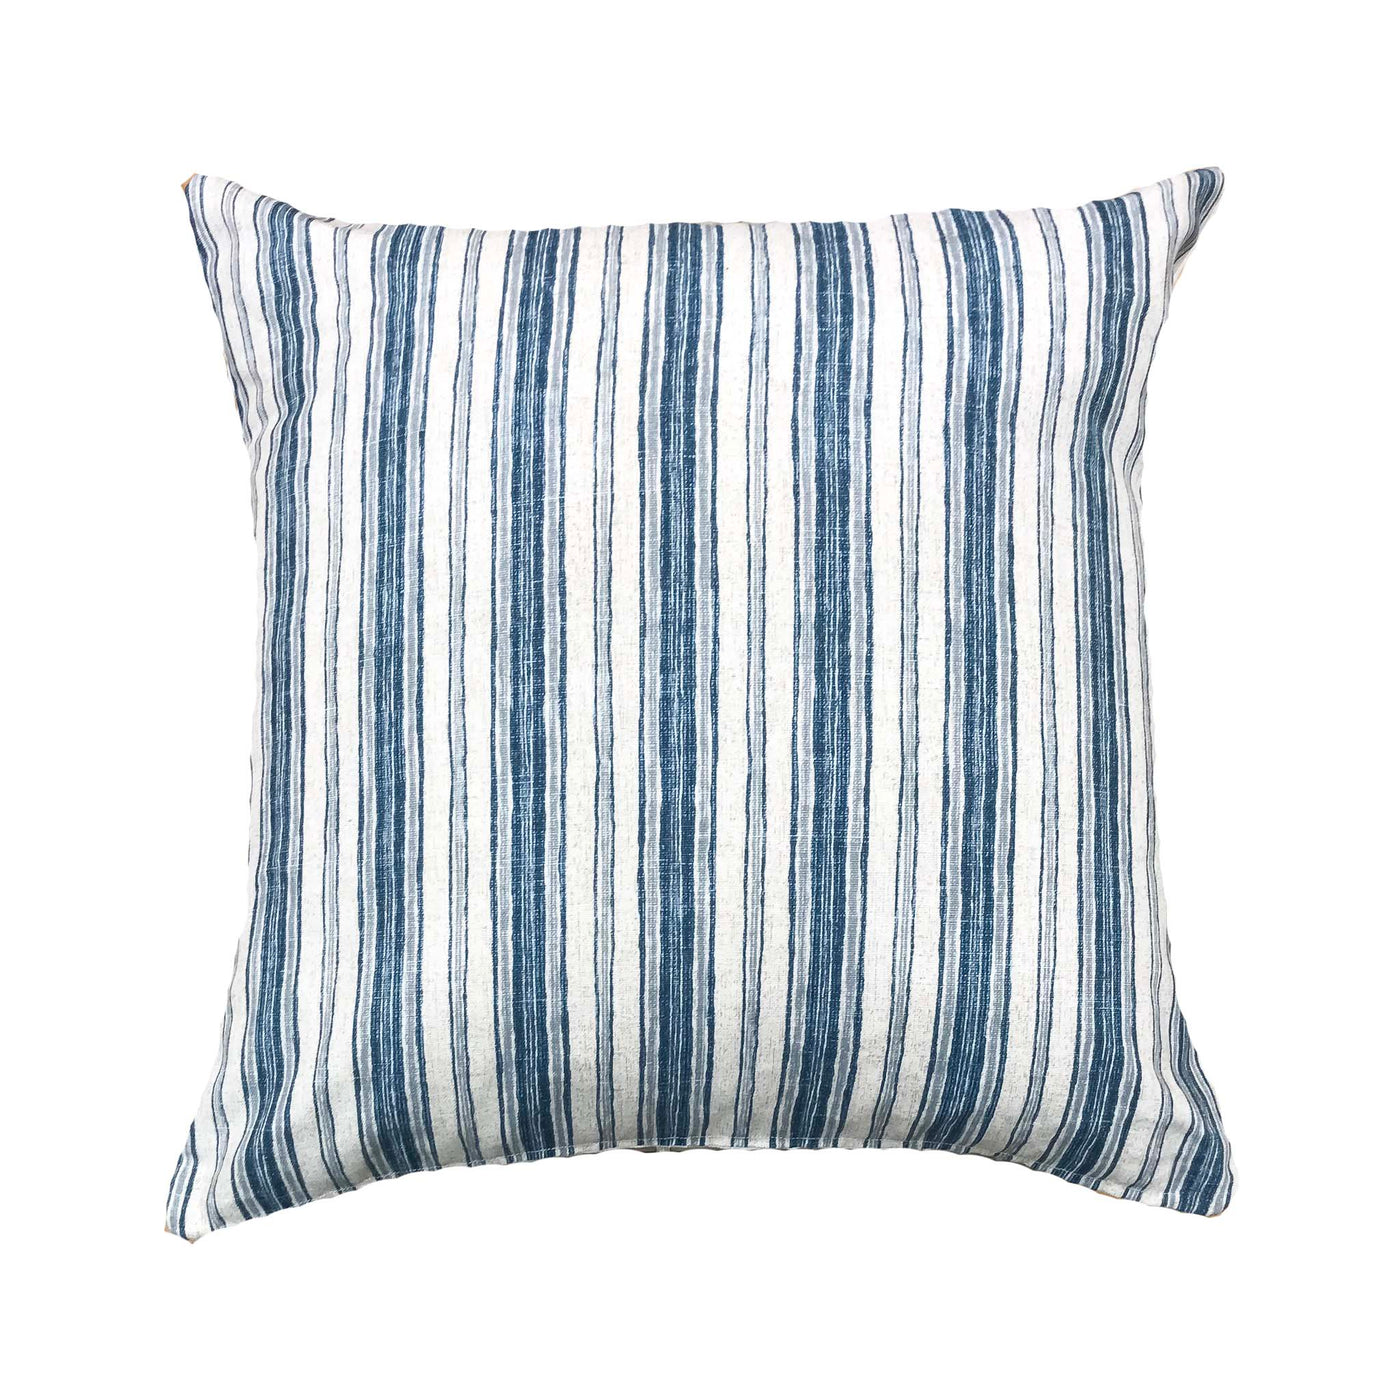 Classic blue stripe pillows - CLARK - Studio Pillows